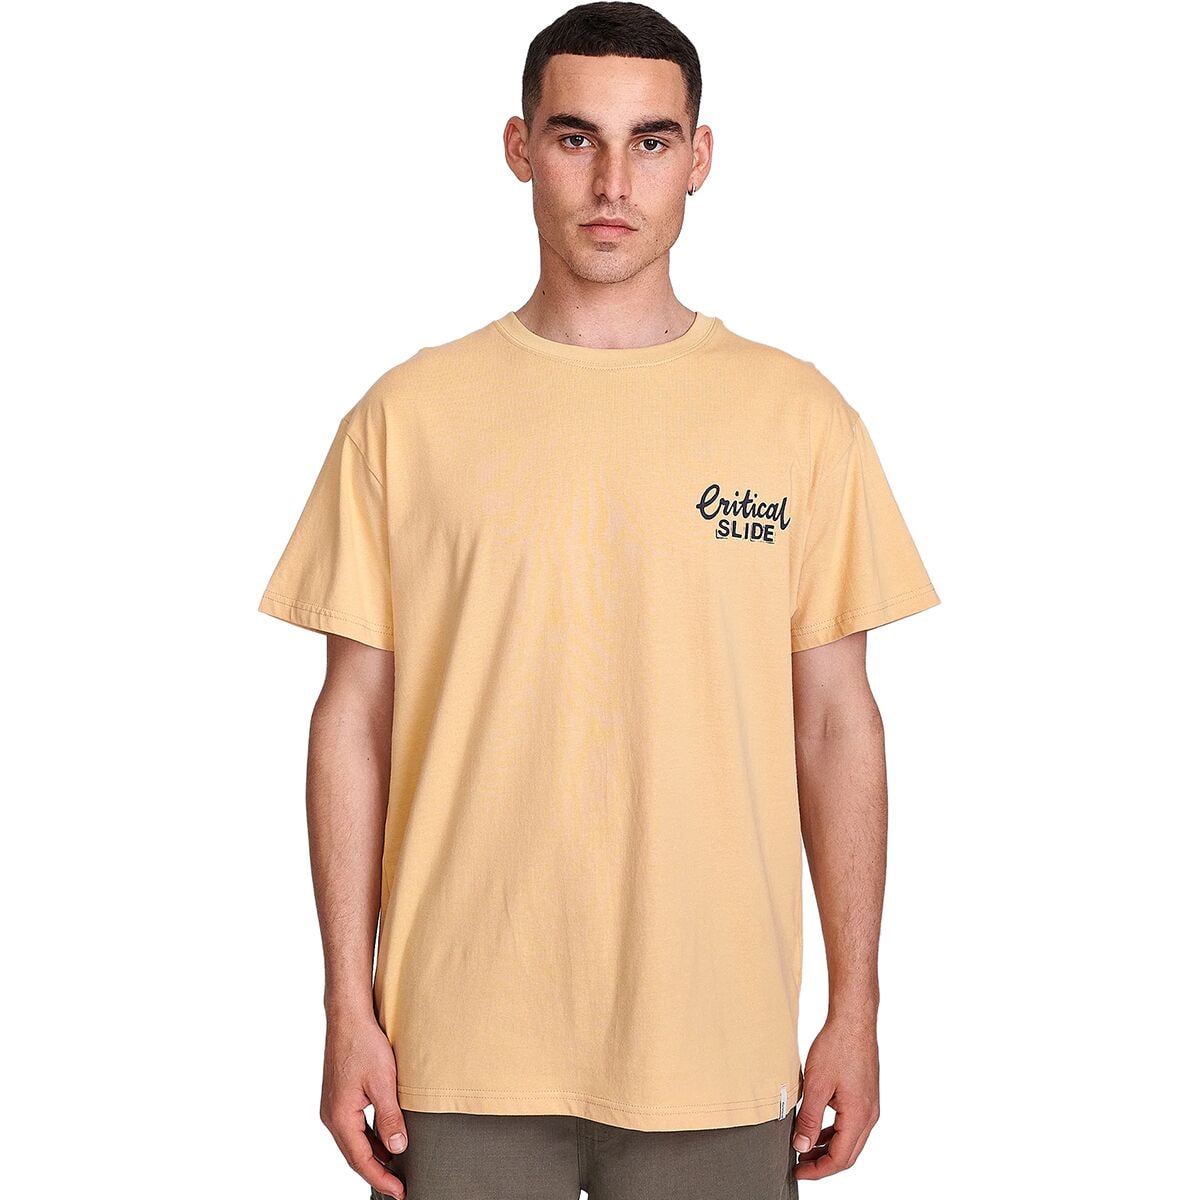 The Critical Slide Society Creator Short-Sleeve T-Shirt - Men's